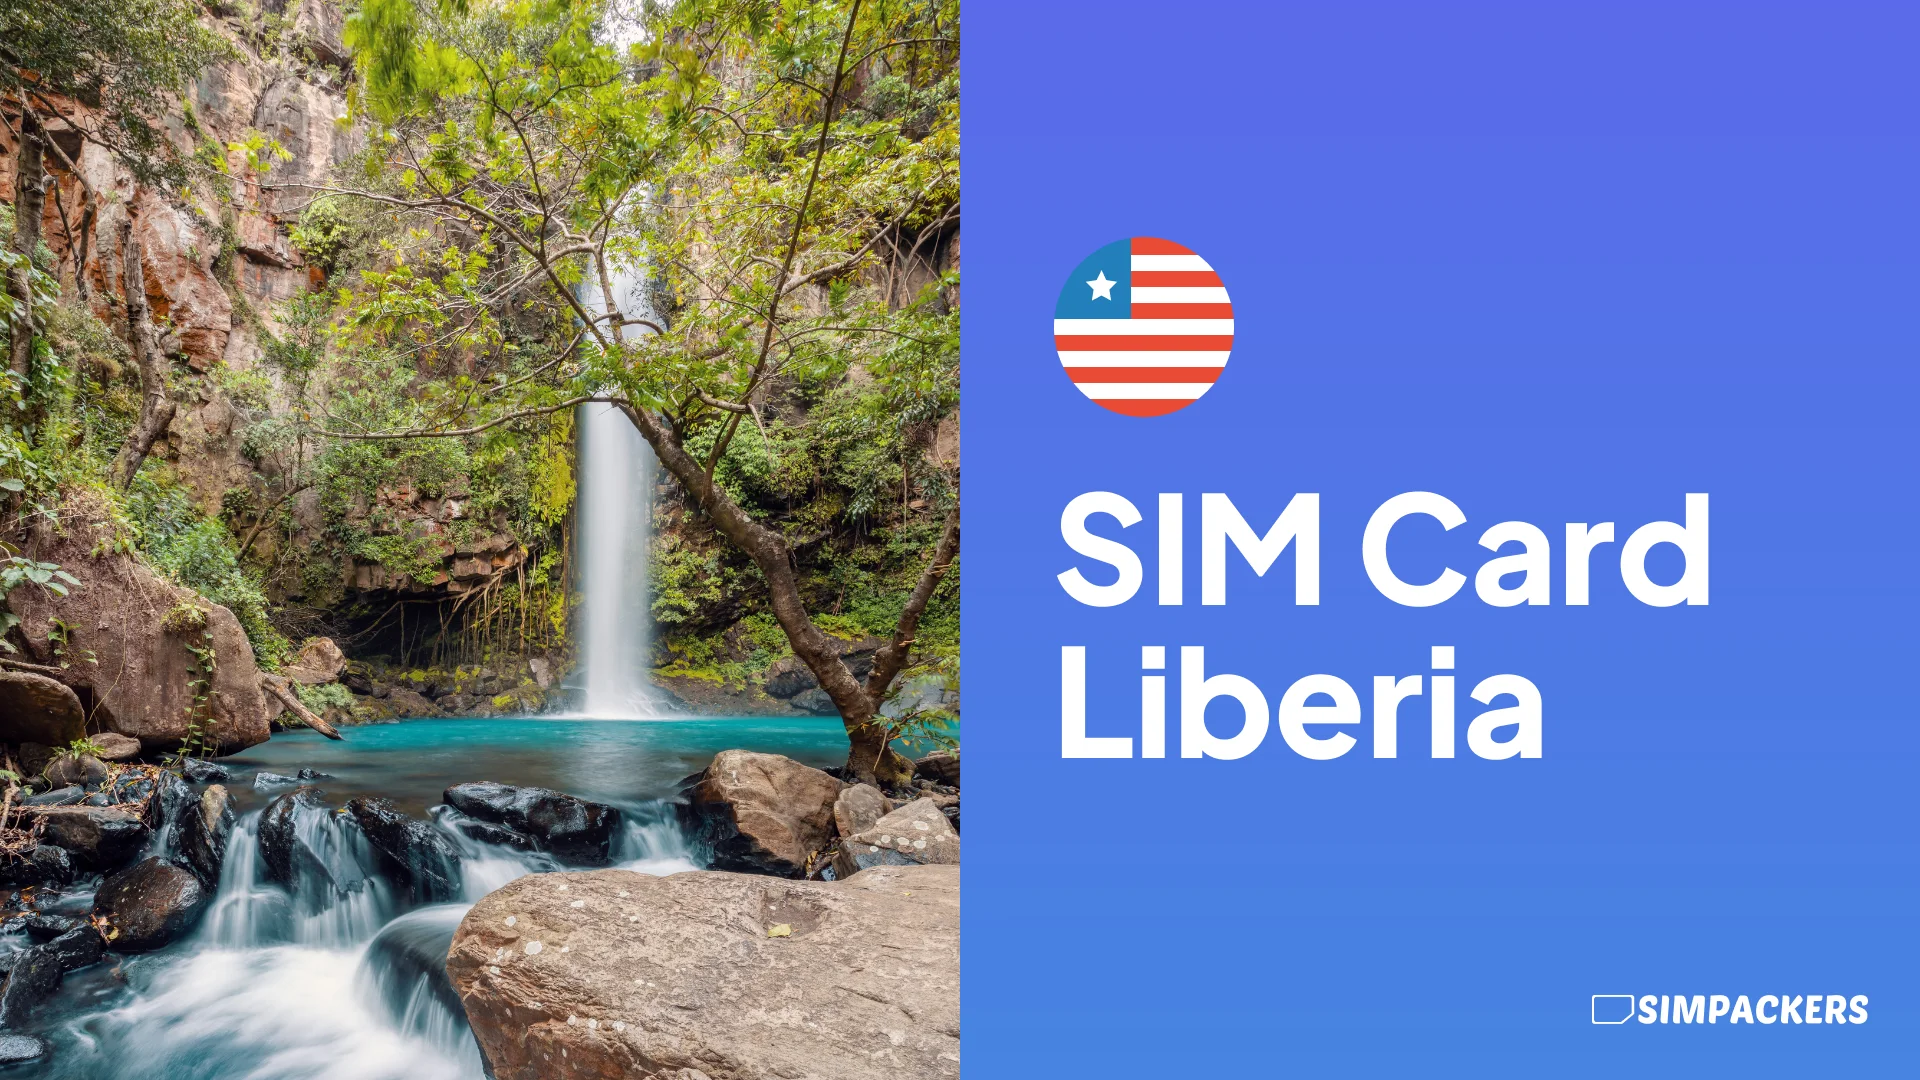 EN/FEATURED_IMAGES/sim-card-liberia.webp